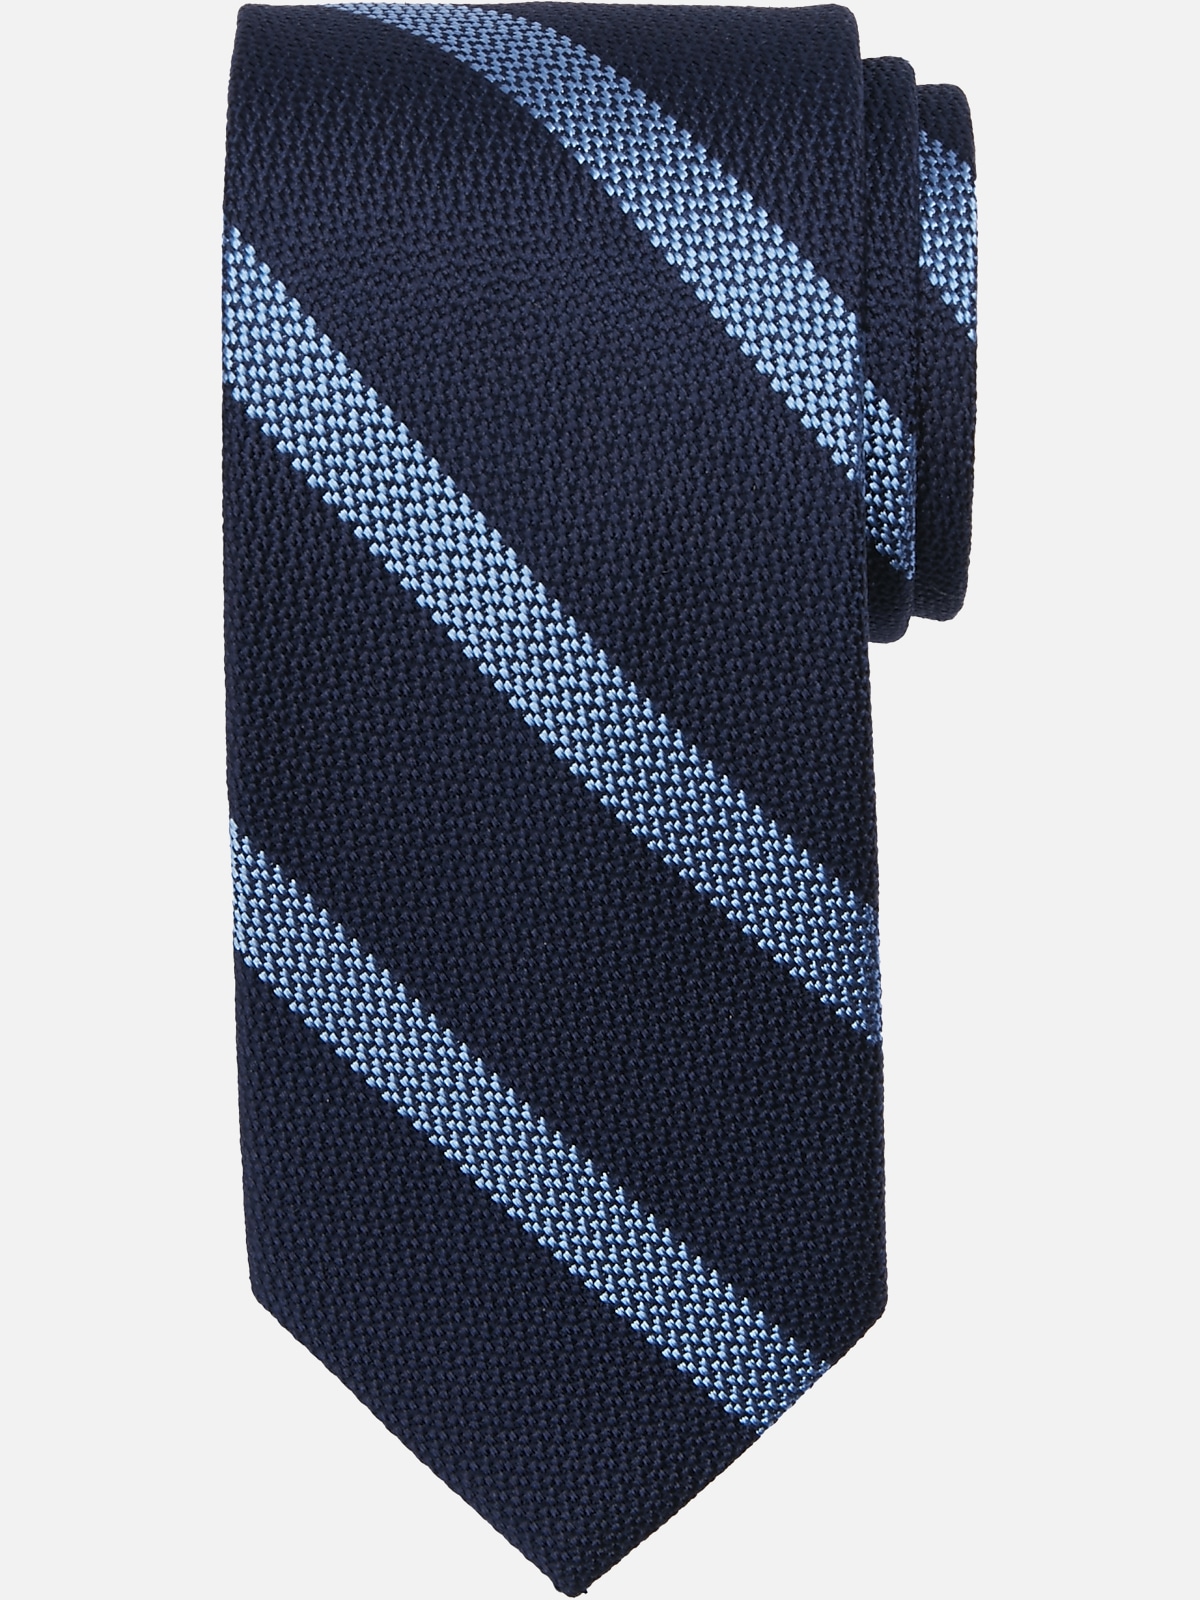 Pronto Uomo Narrow Woven Stripe Tie | All Clearance $39.99| Men's Wearhouse